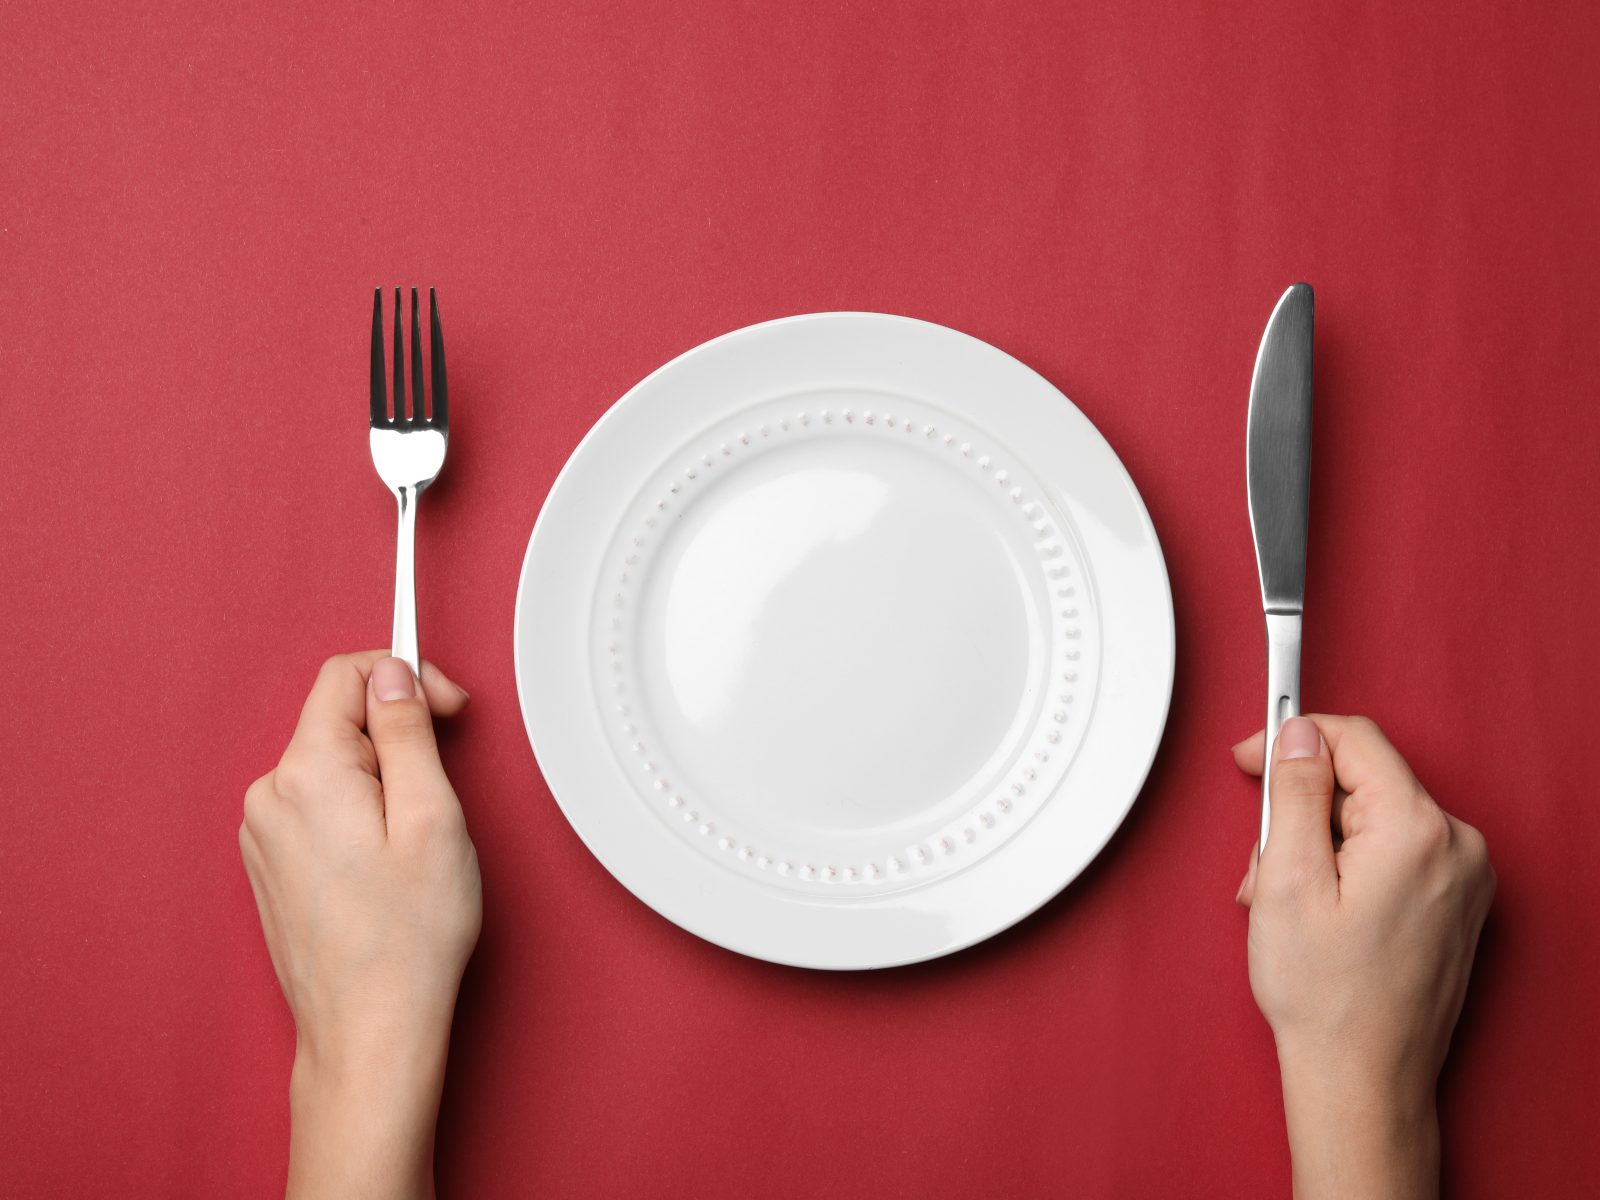 Лишняя тарелка на столе. Пустая тарелка на столе. Пустая тарелка. Тарелка с вилкой. Тарелка вилка нож.